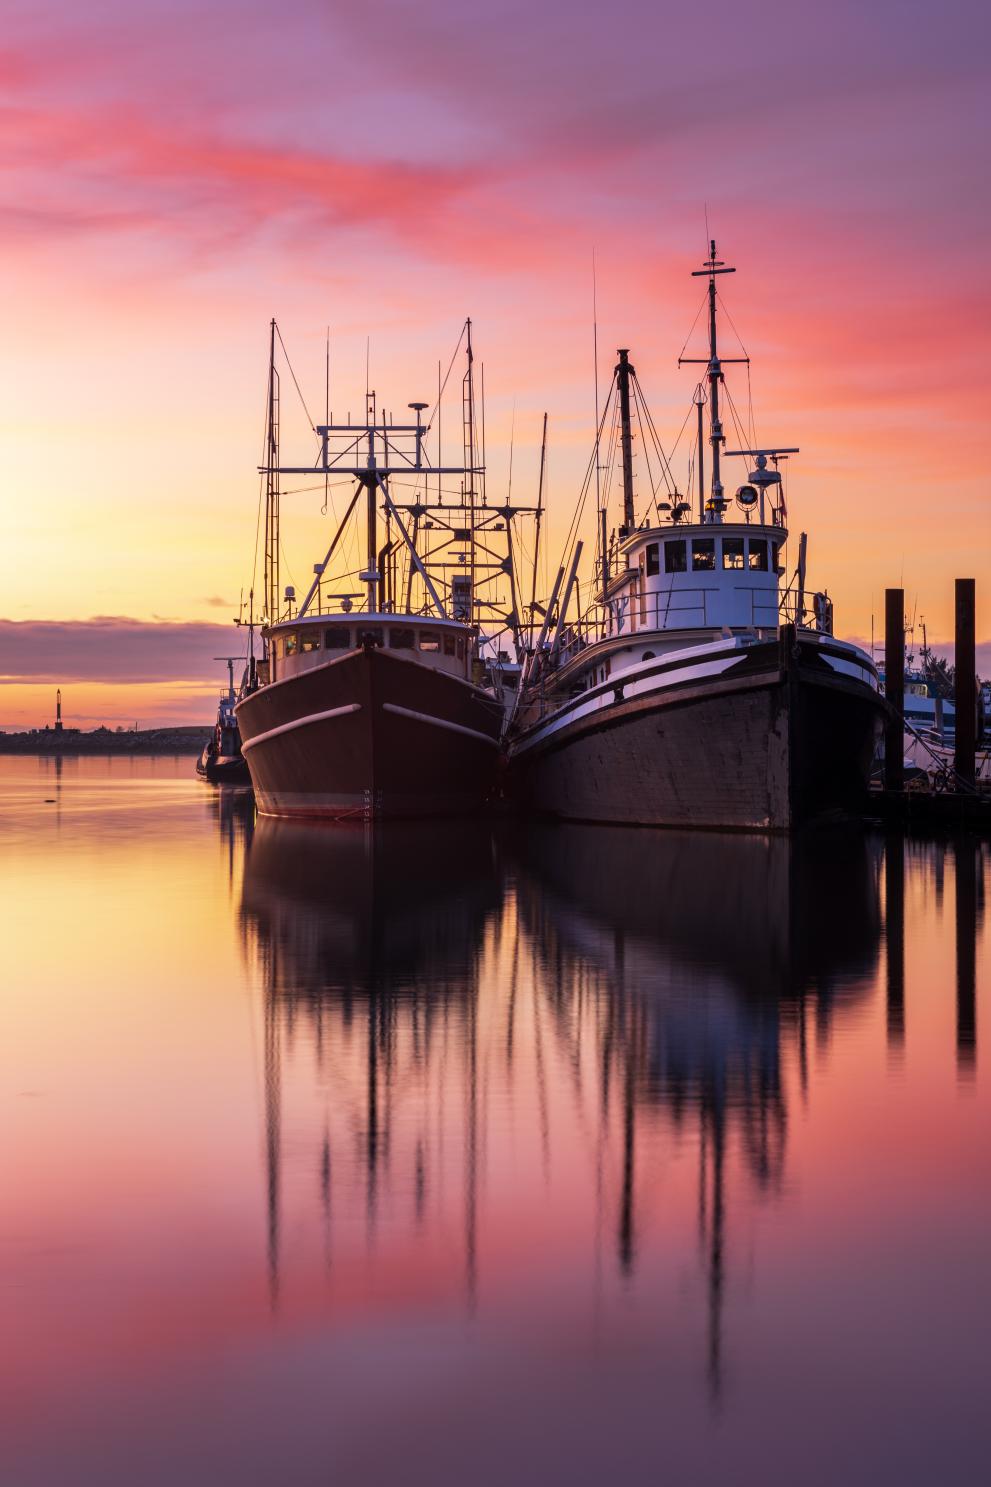 Image of fishing boats at sunset.